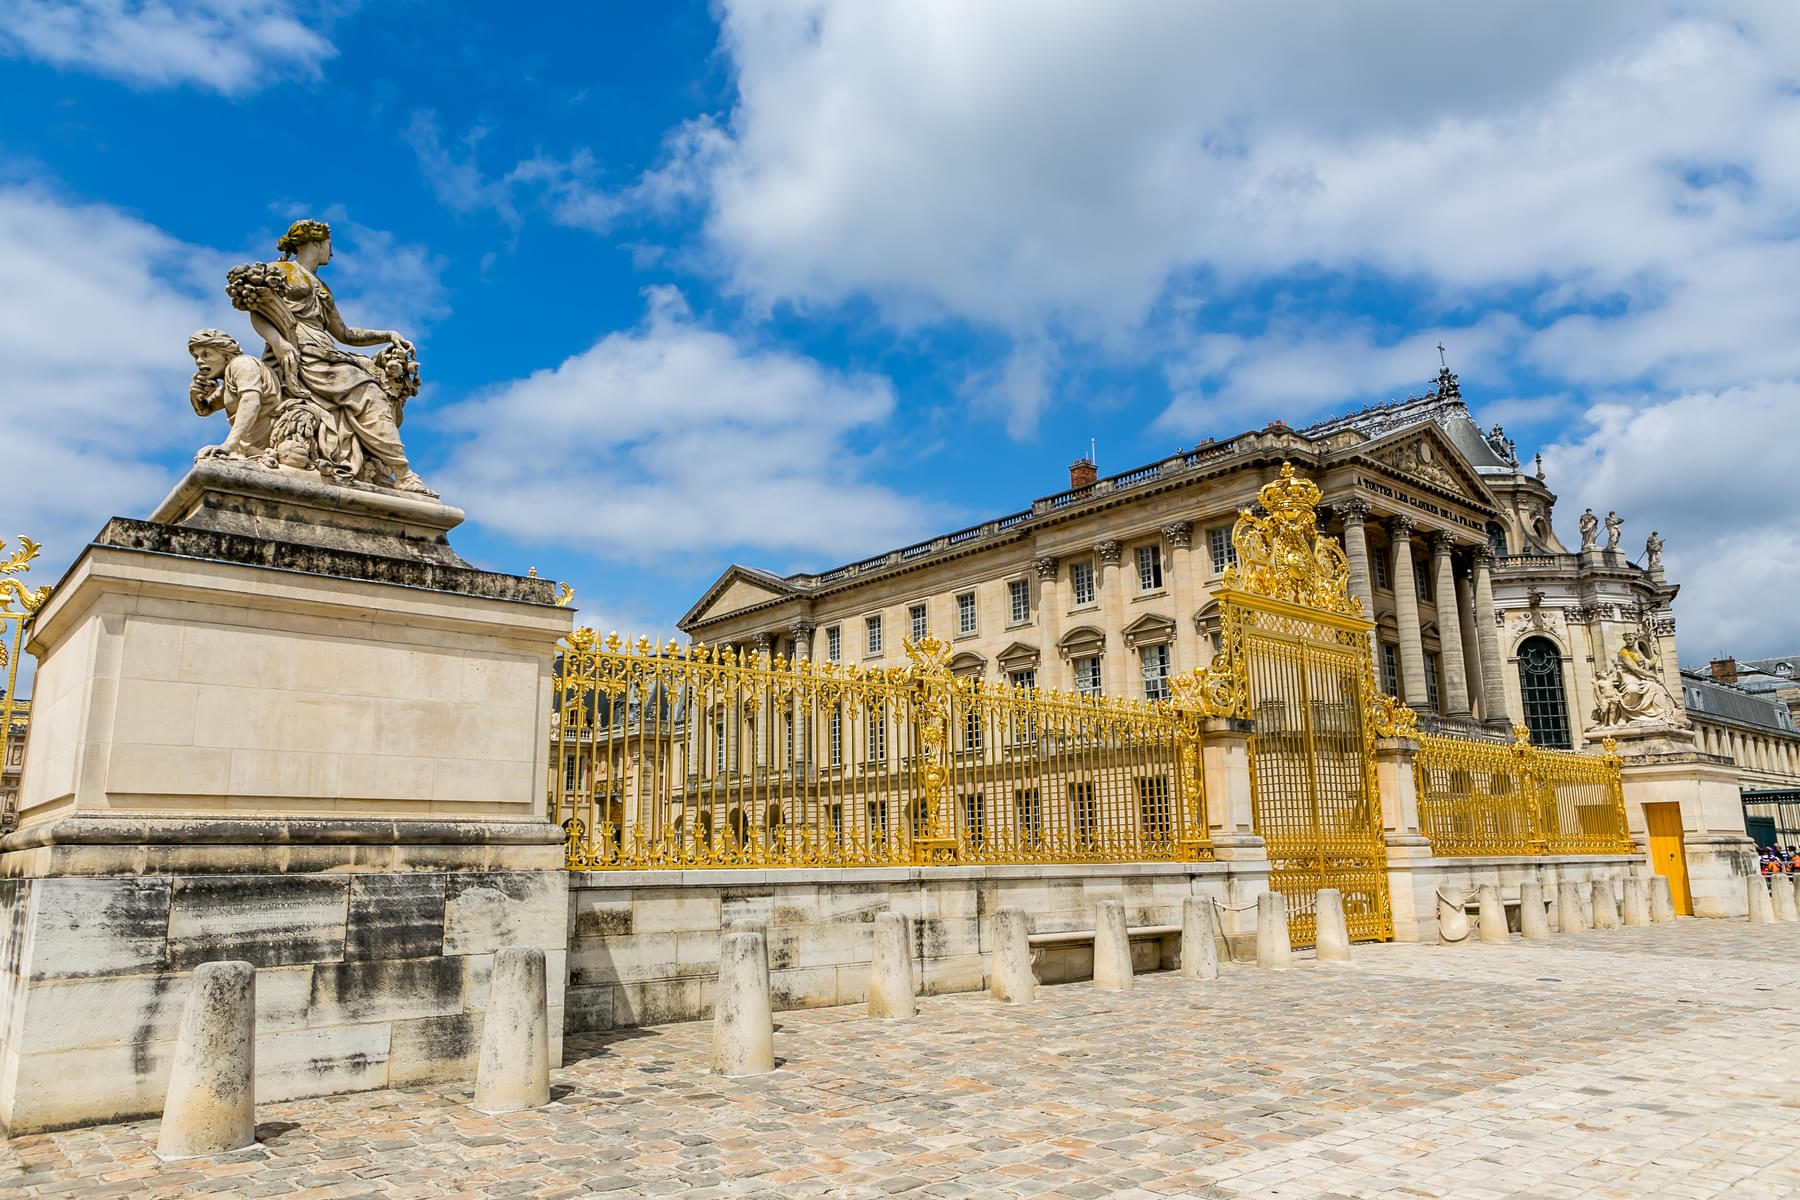 The majestic gold coloured Entrance of Palace de Versailles